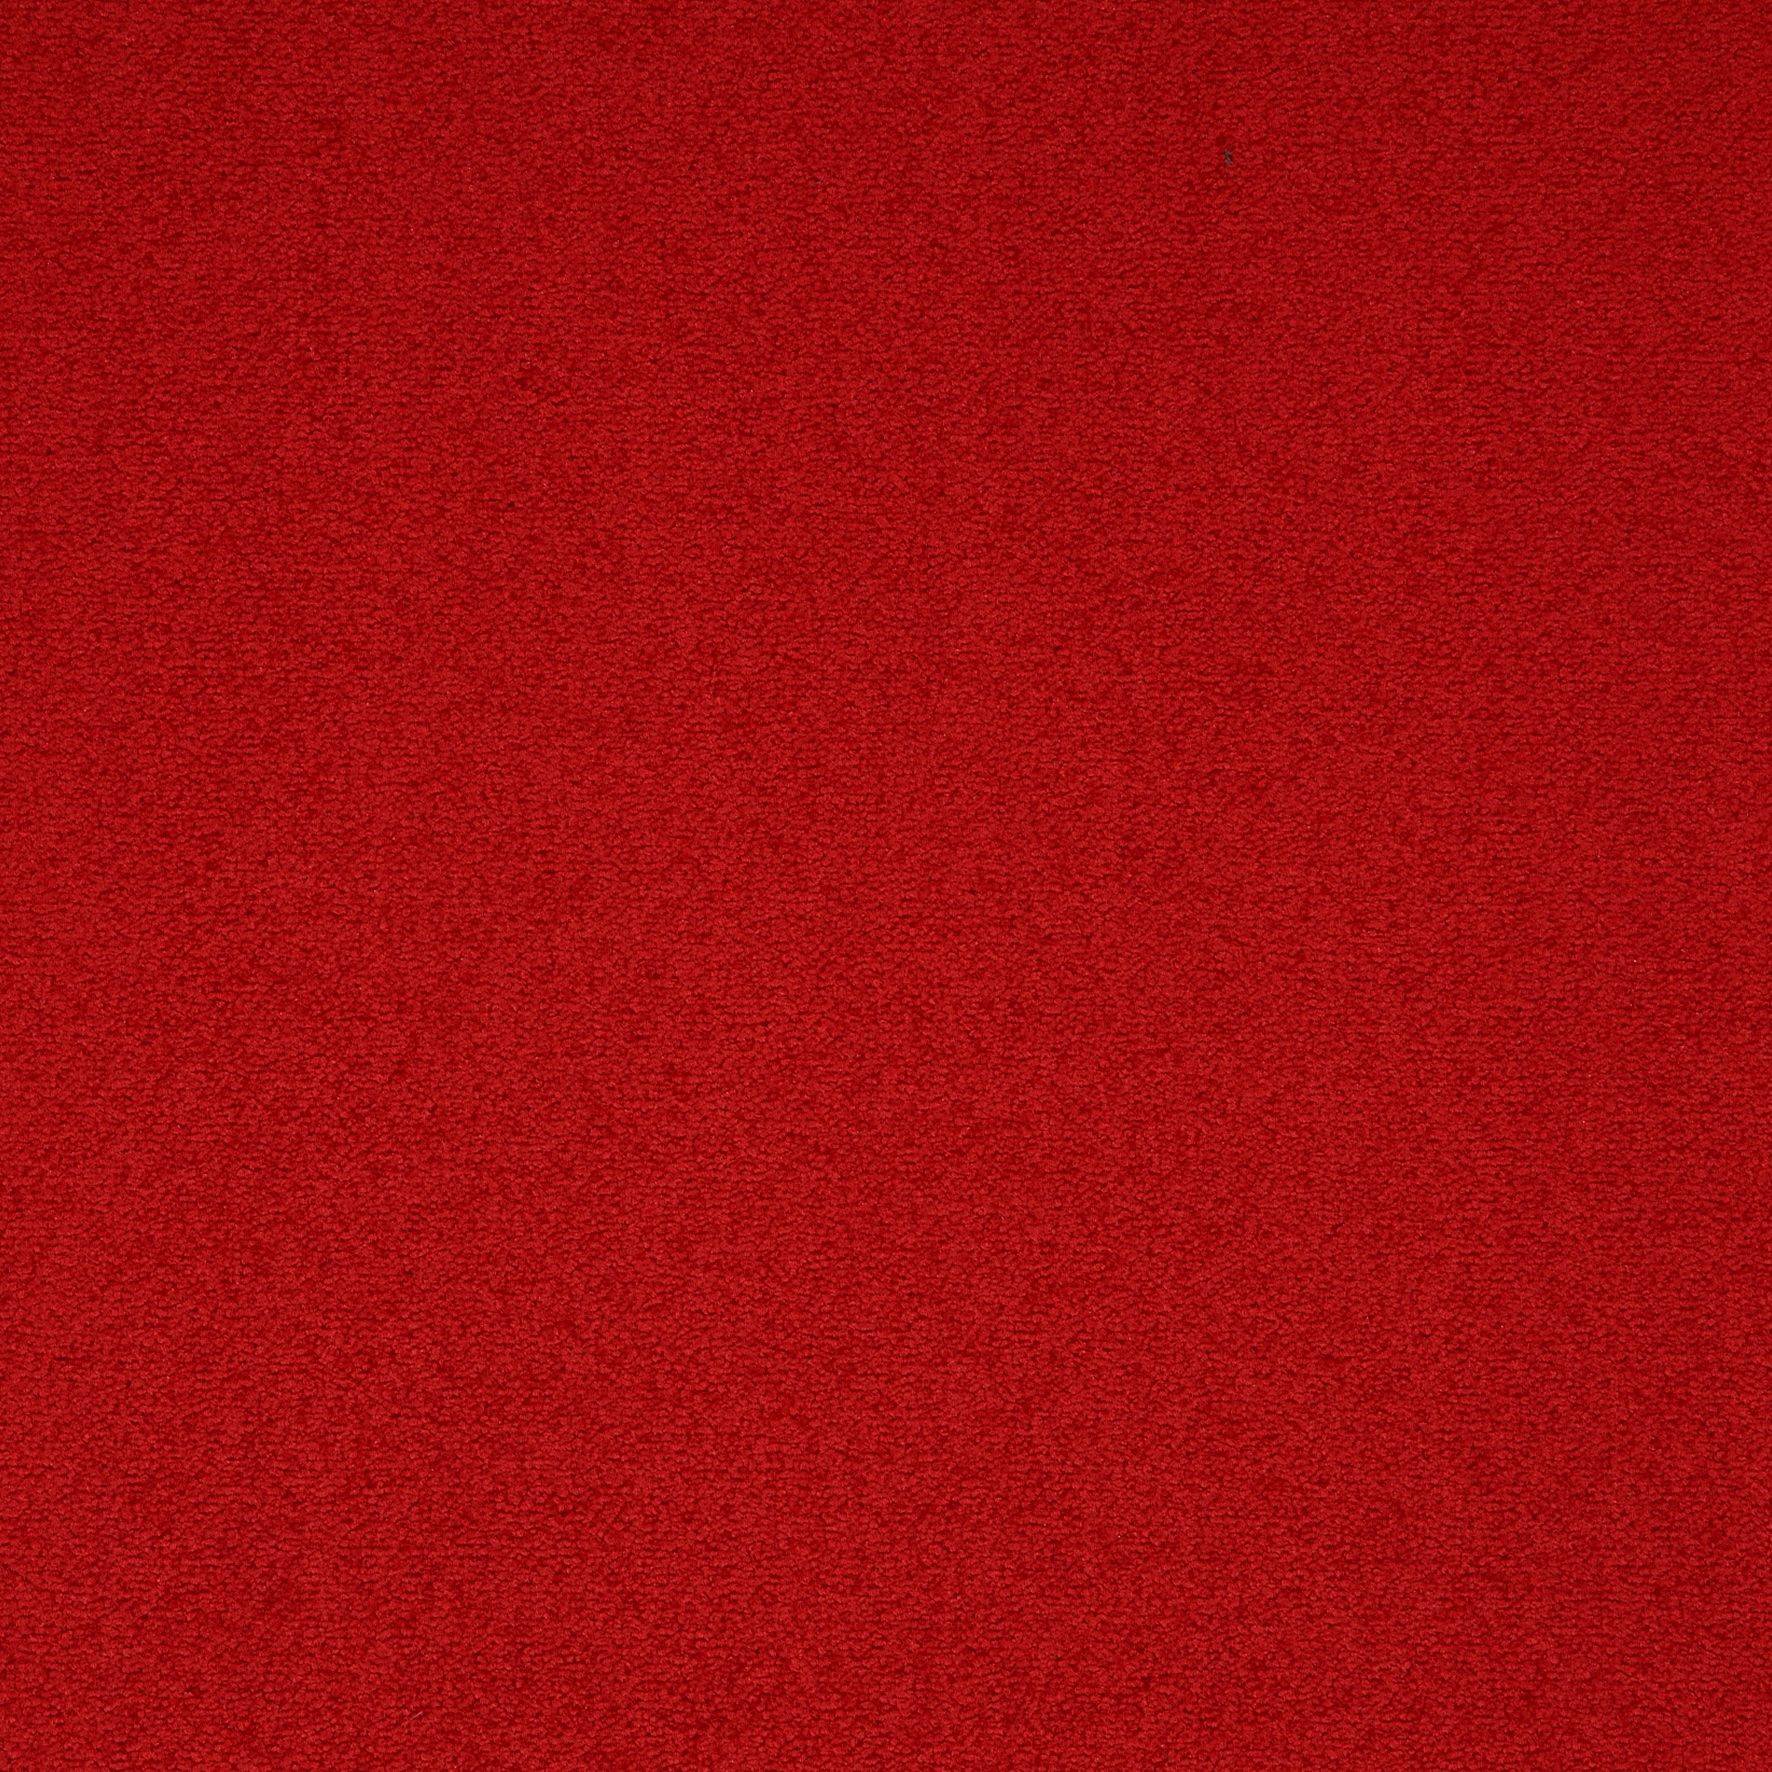 Paragon Maestro Carpet Tile Red